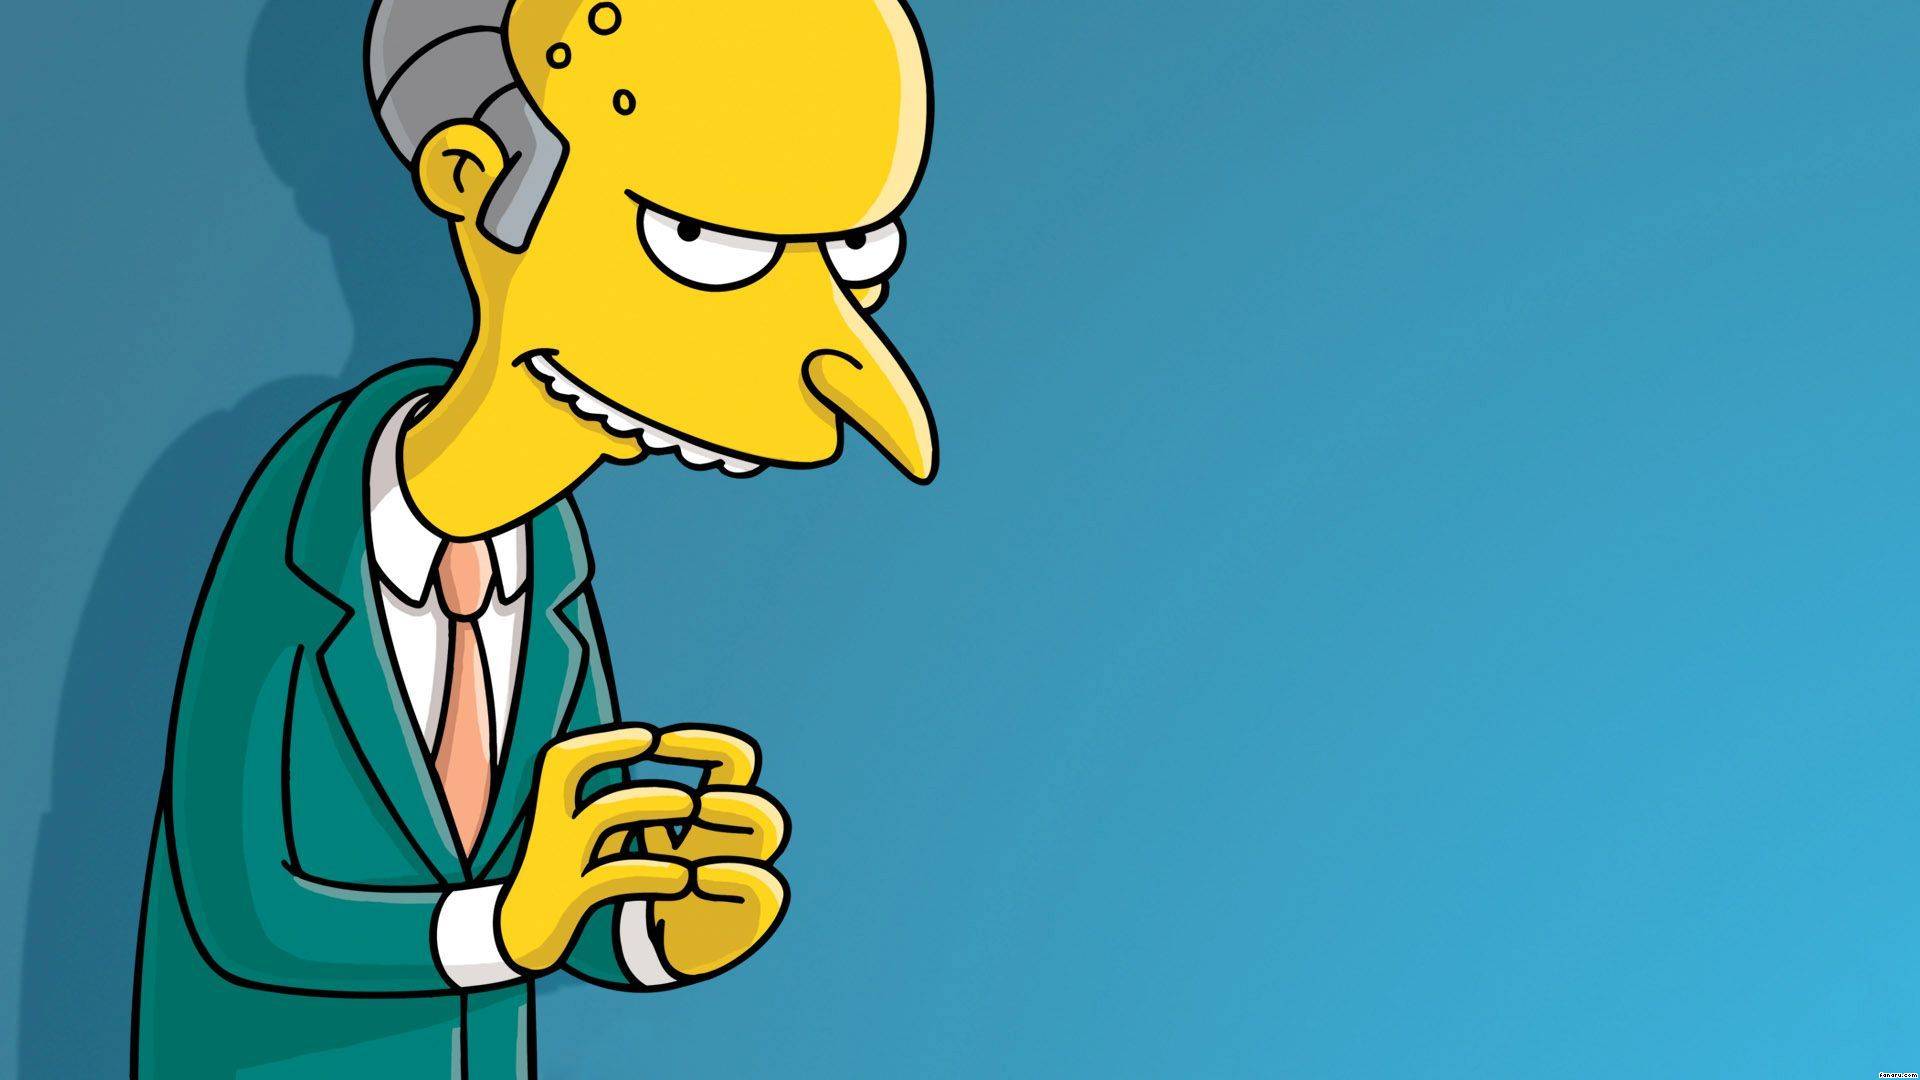 Mr. Burns - The Simpsons Wallpaper 1920x1080 136009